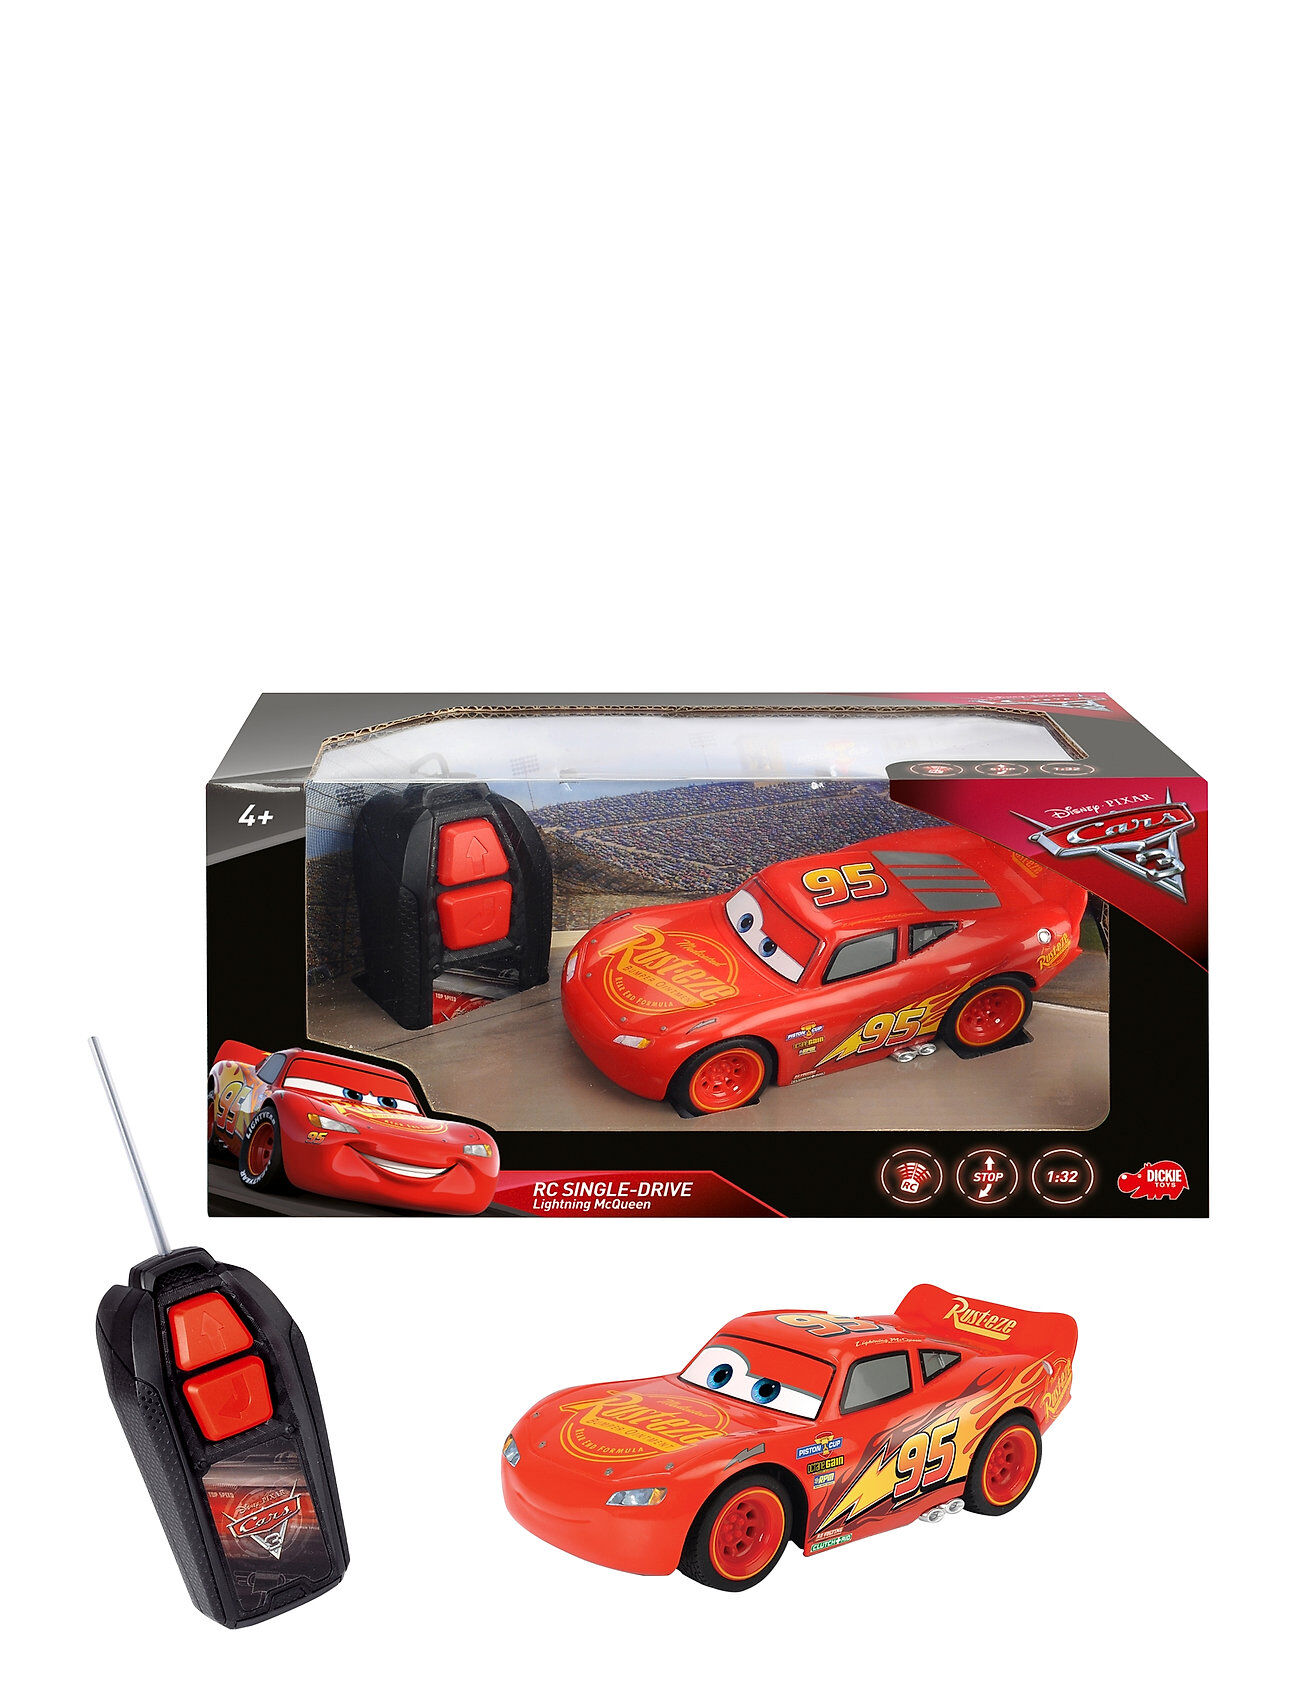 Disney Cars - Lightning Mcqueen Single Drive Toys Toy Cars & Vehicles Toy Cars Rød Disney